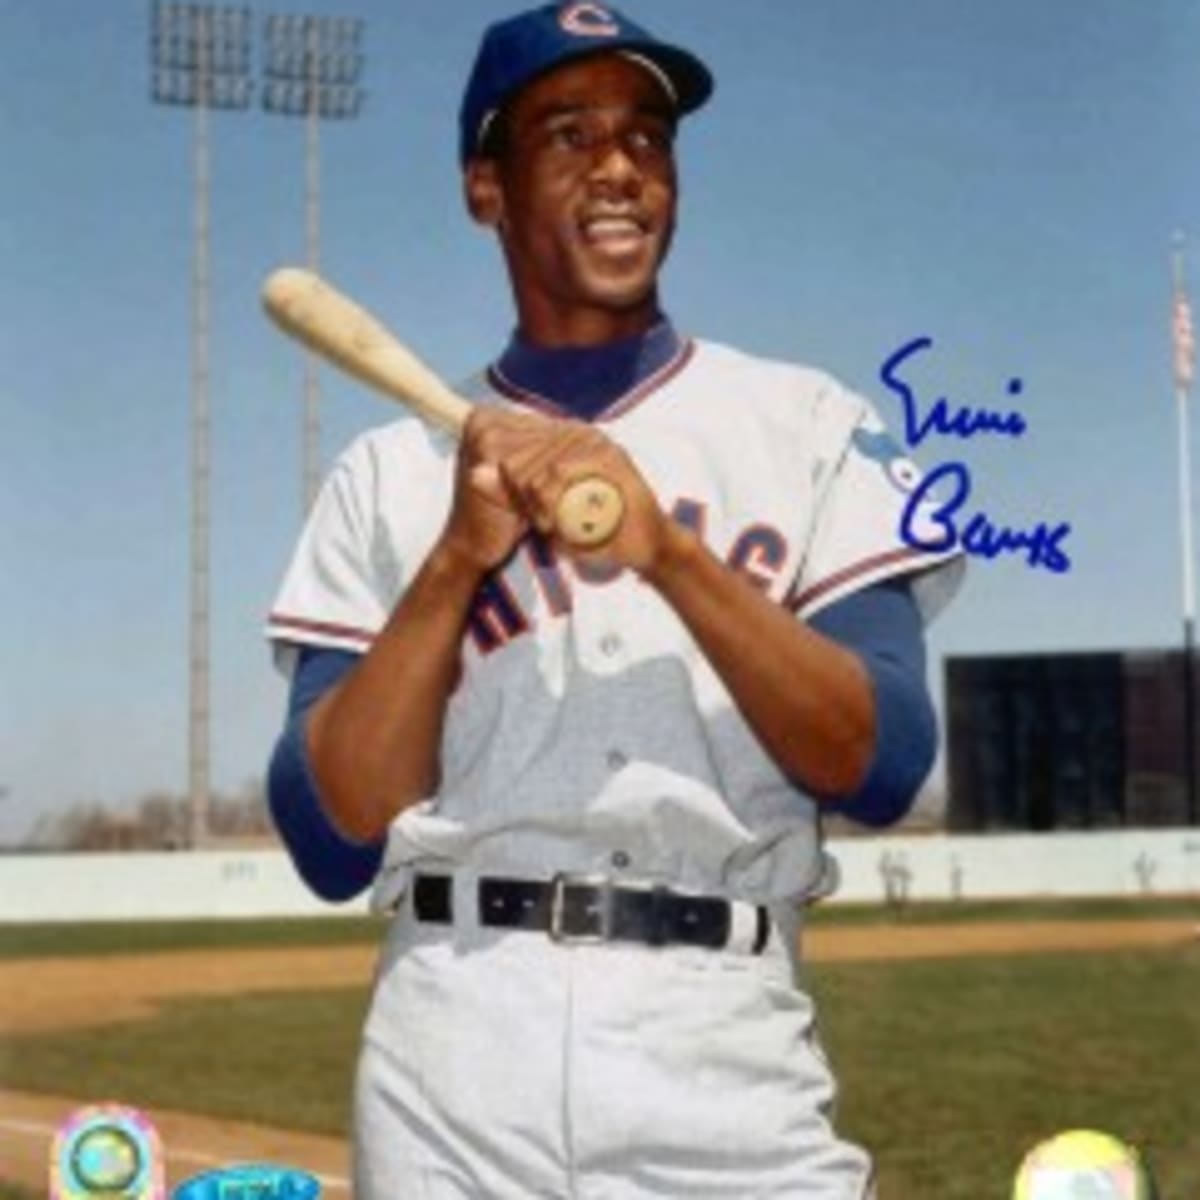 Throwback Chicago Cubs Ernie Banks Vintage Baseball Jersey